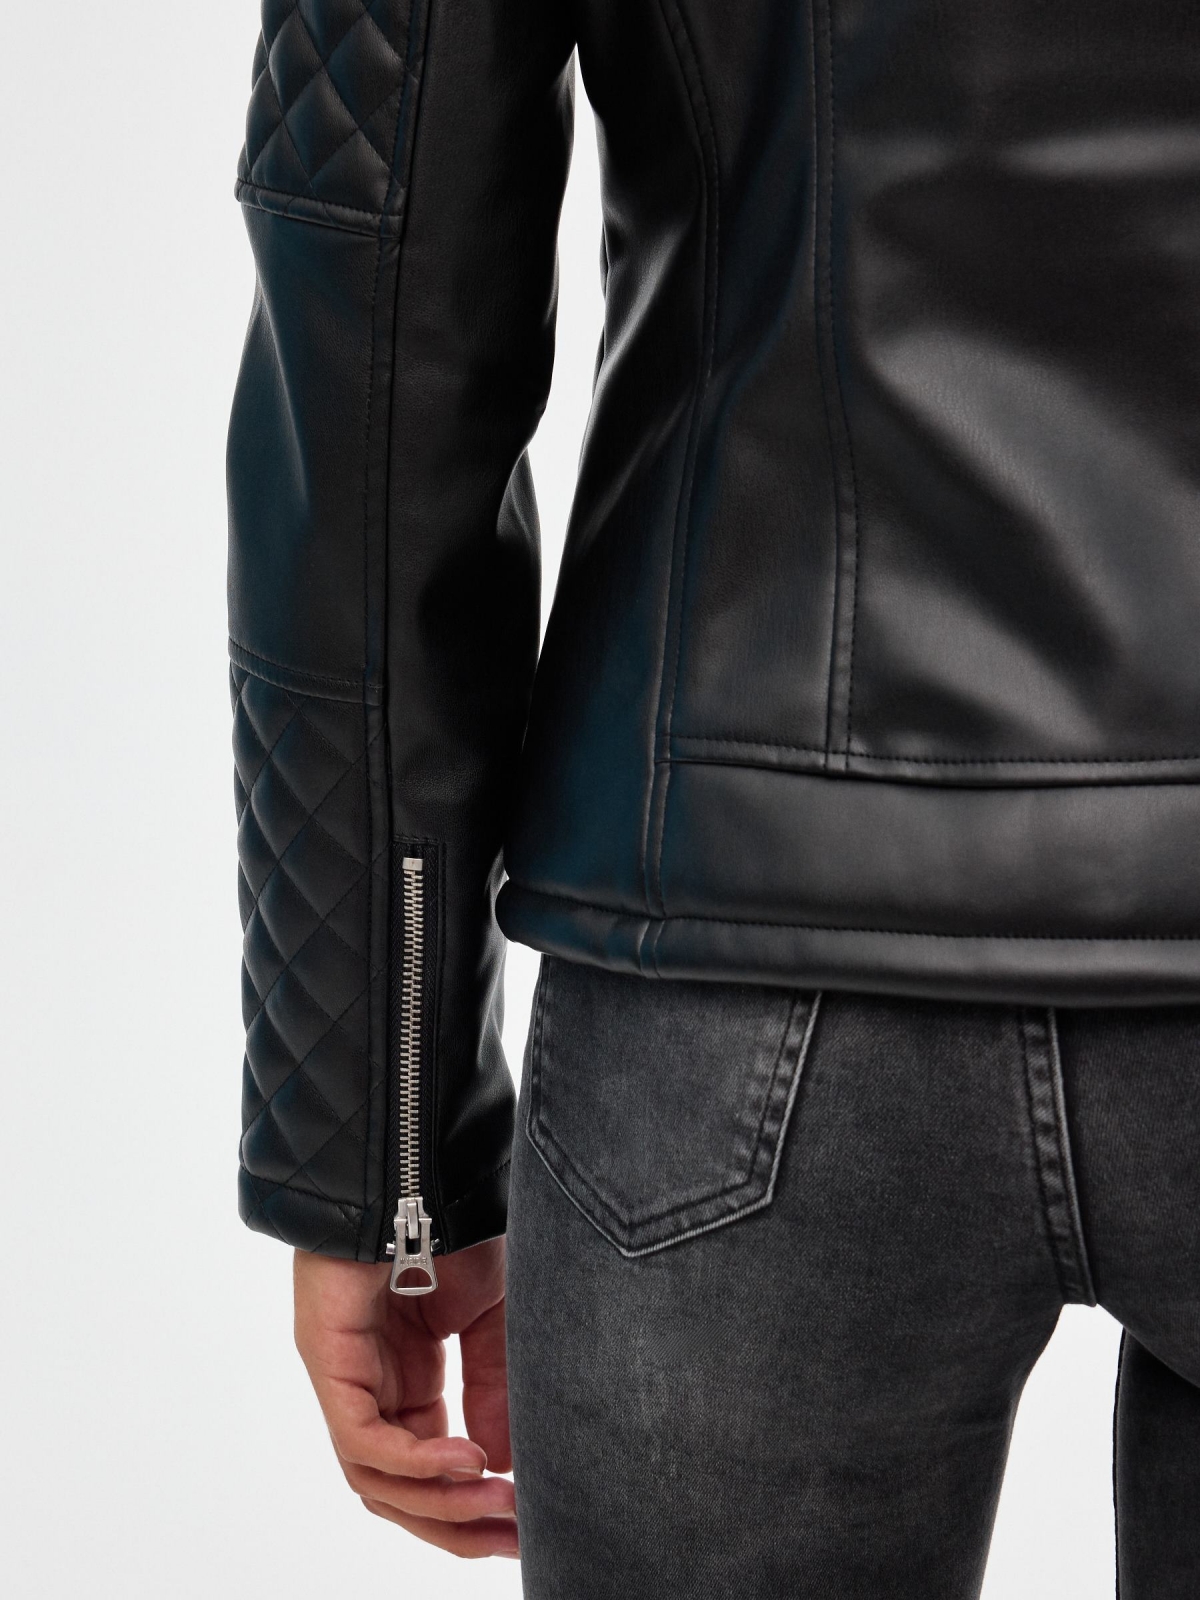 Leather effect biker jacket black detail view